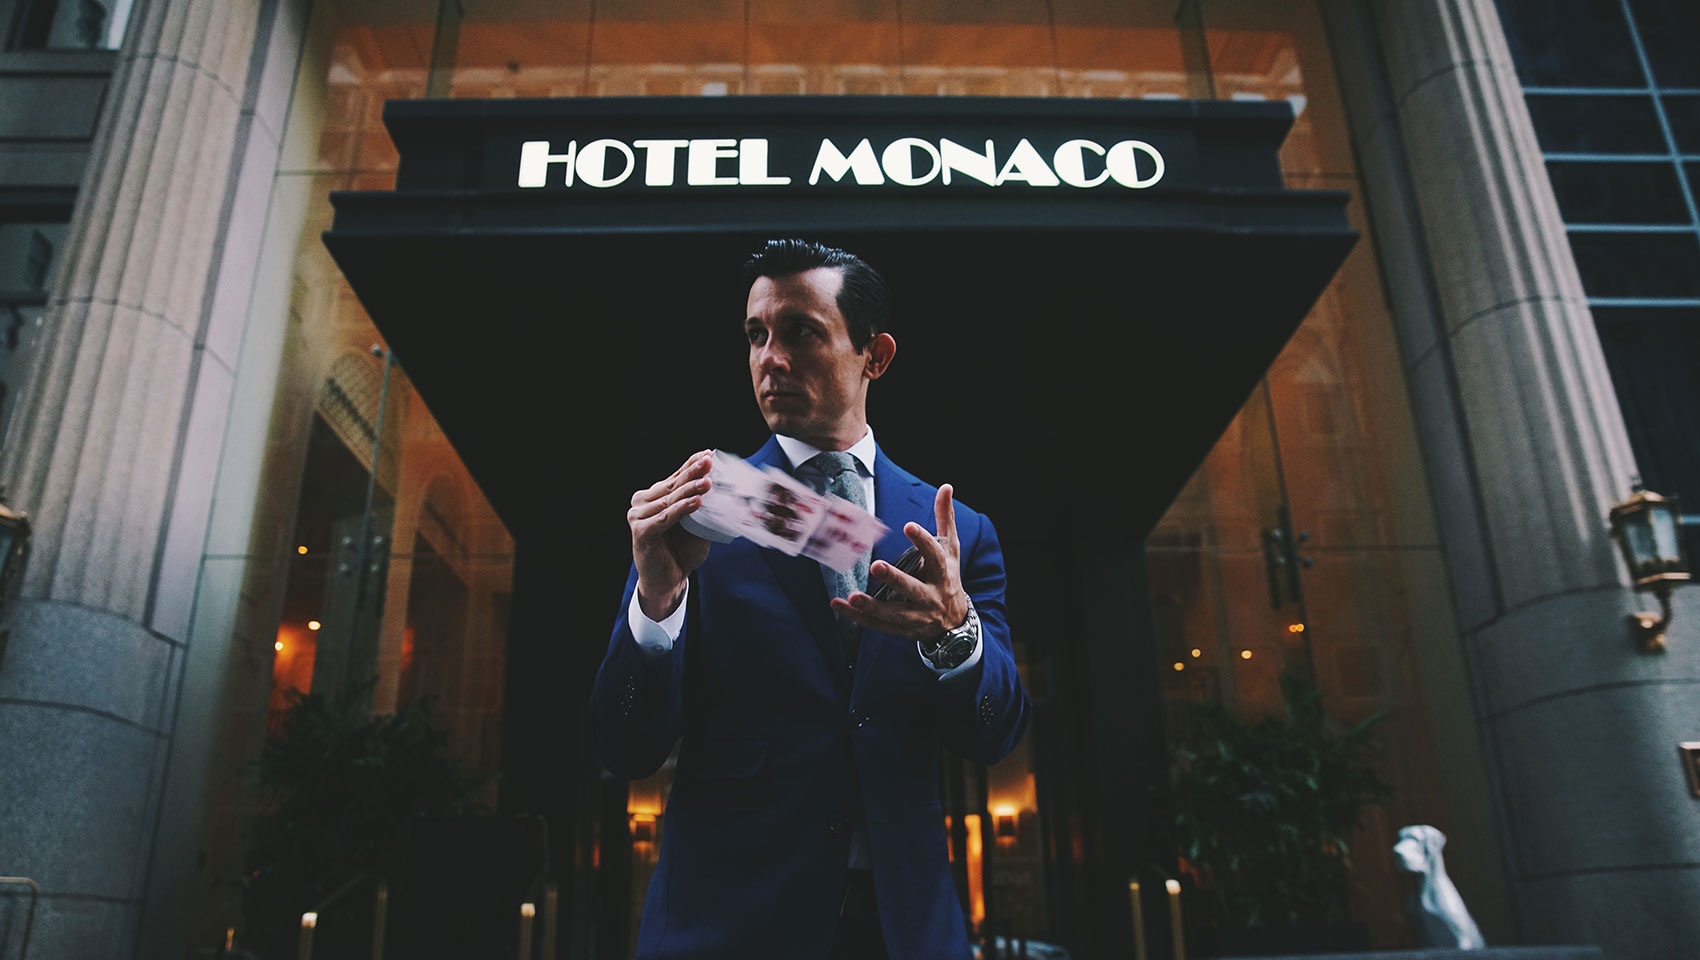 Lee Terbosic magician in front of Hotel Monaco